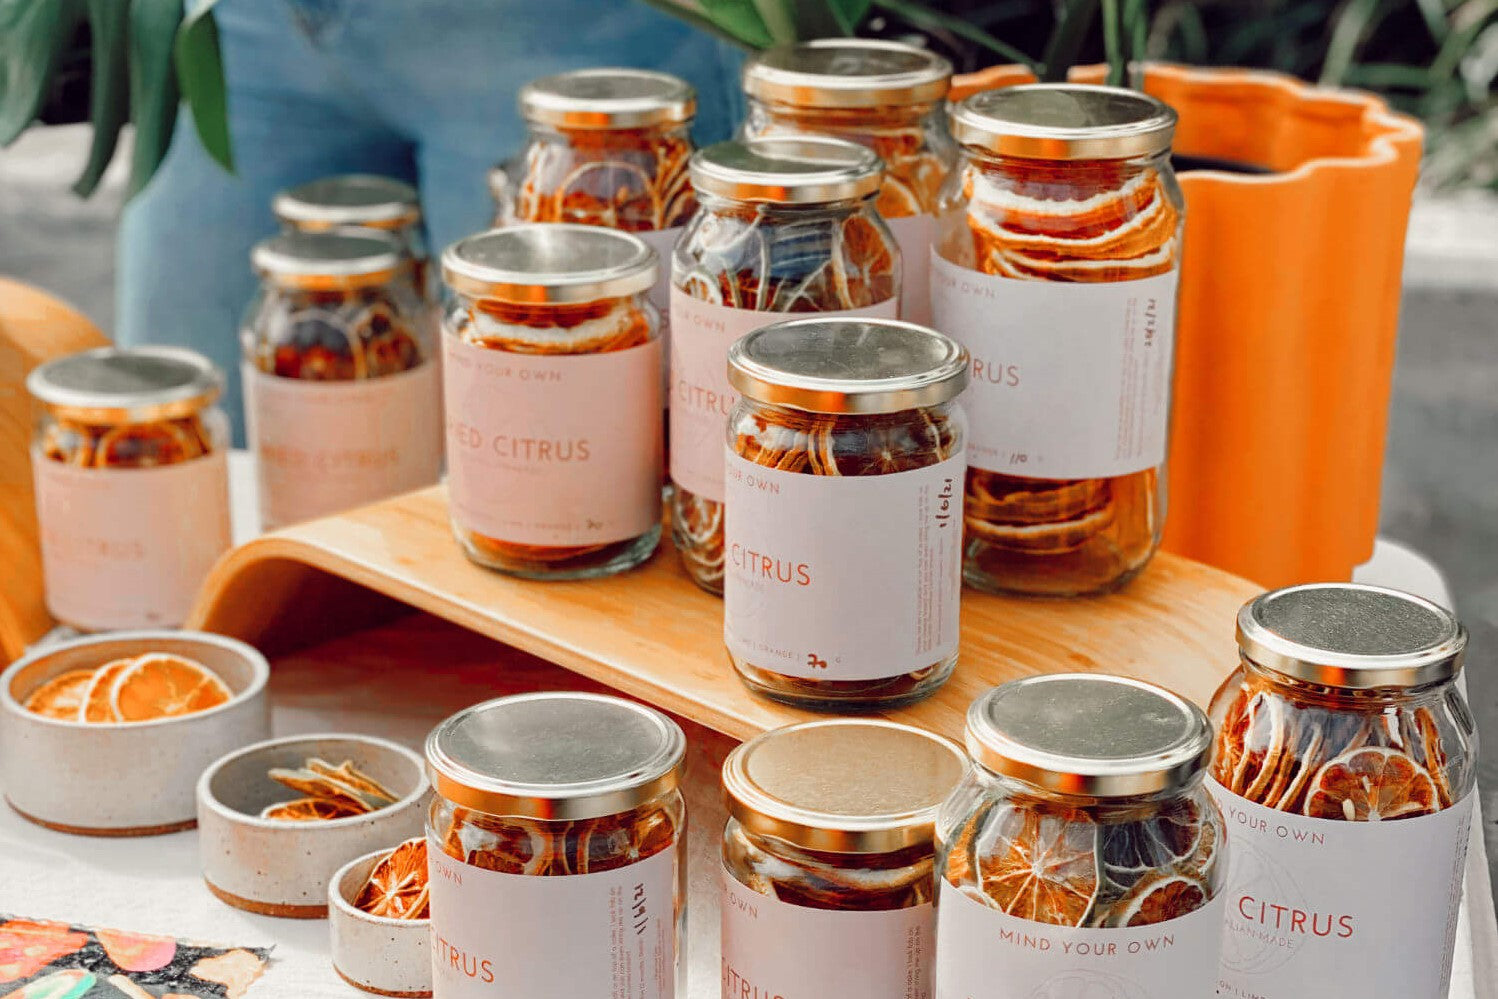 Jars of Mind Your Own dried citrus jars on display at The Market Folk Markets Brisbane.